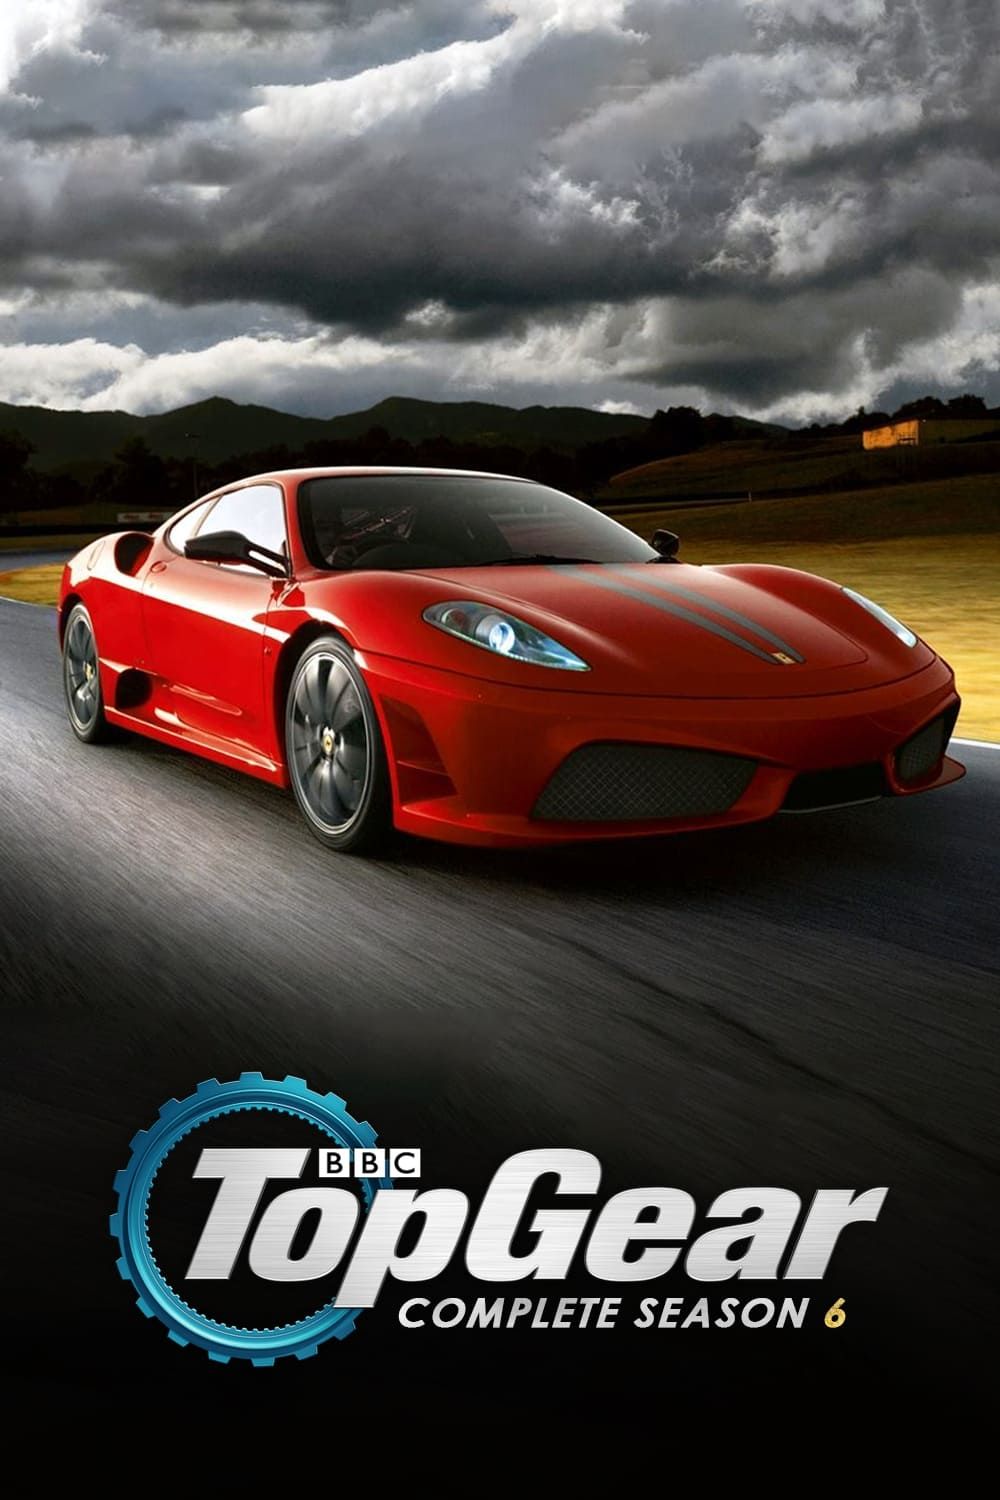 Top Gear Season 1 - watch full episodes streaming online